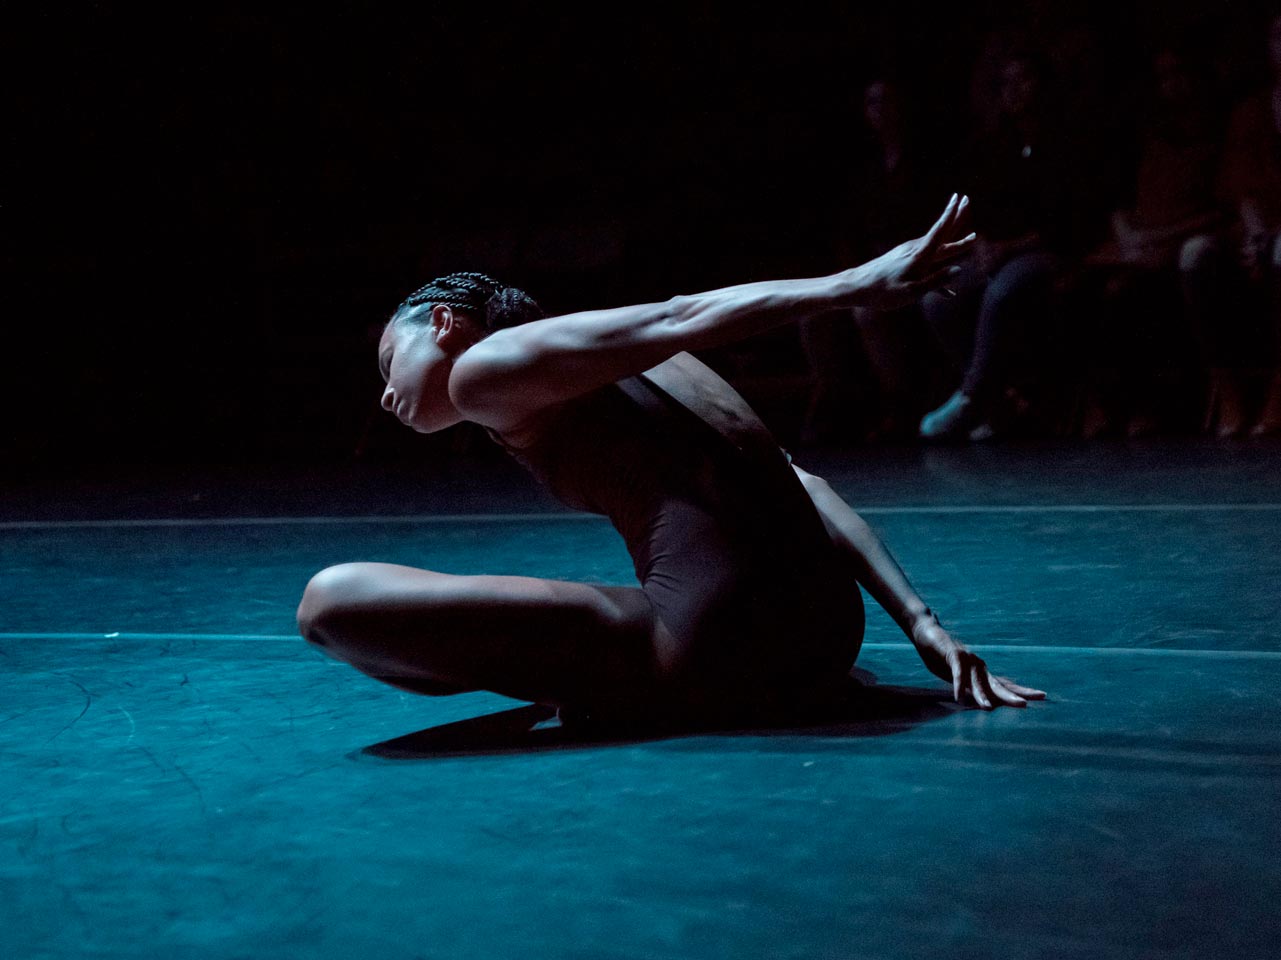 push/FOLD dancer Ashley Morton performing at Union PDX - Festival:19 at the Hampton Opera Center in Portland, Oregon | Photographer: Jingzi Zhao